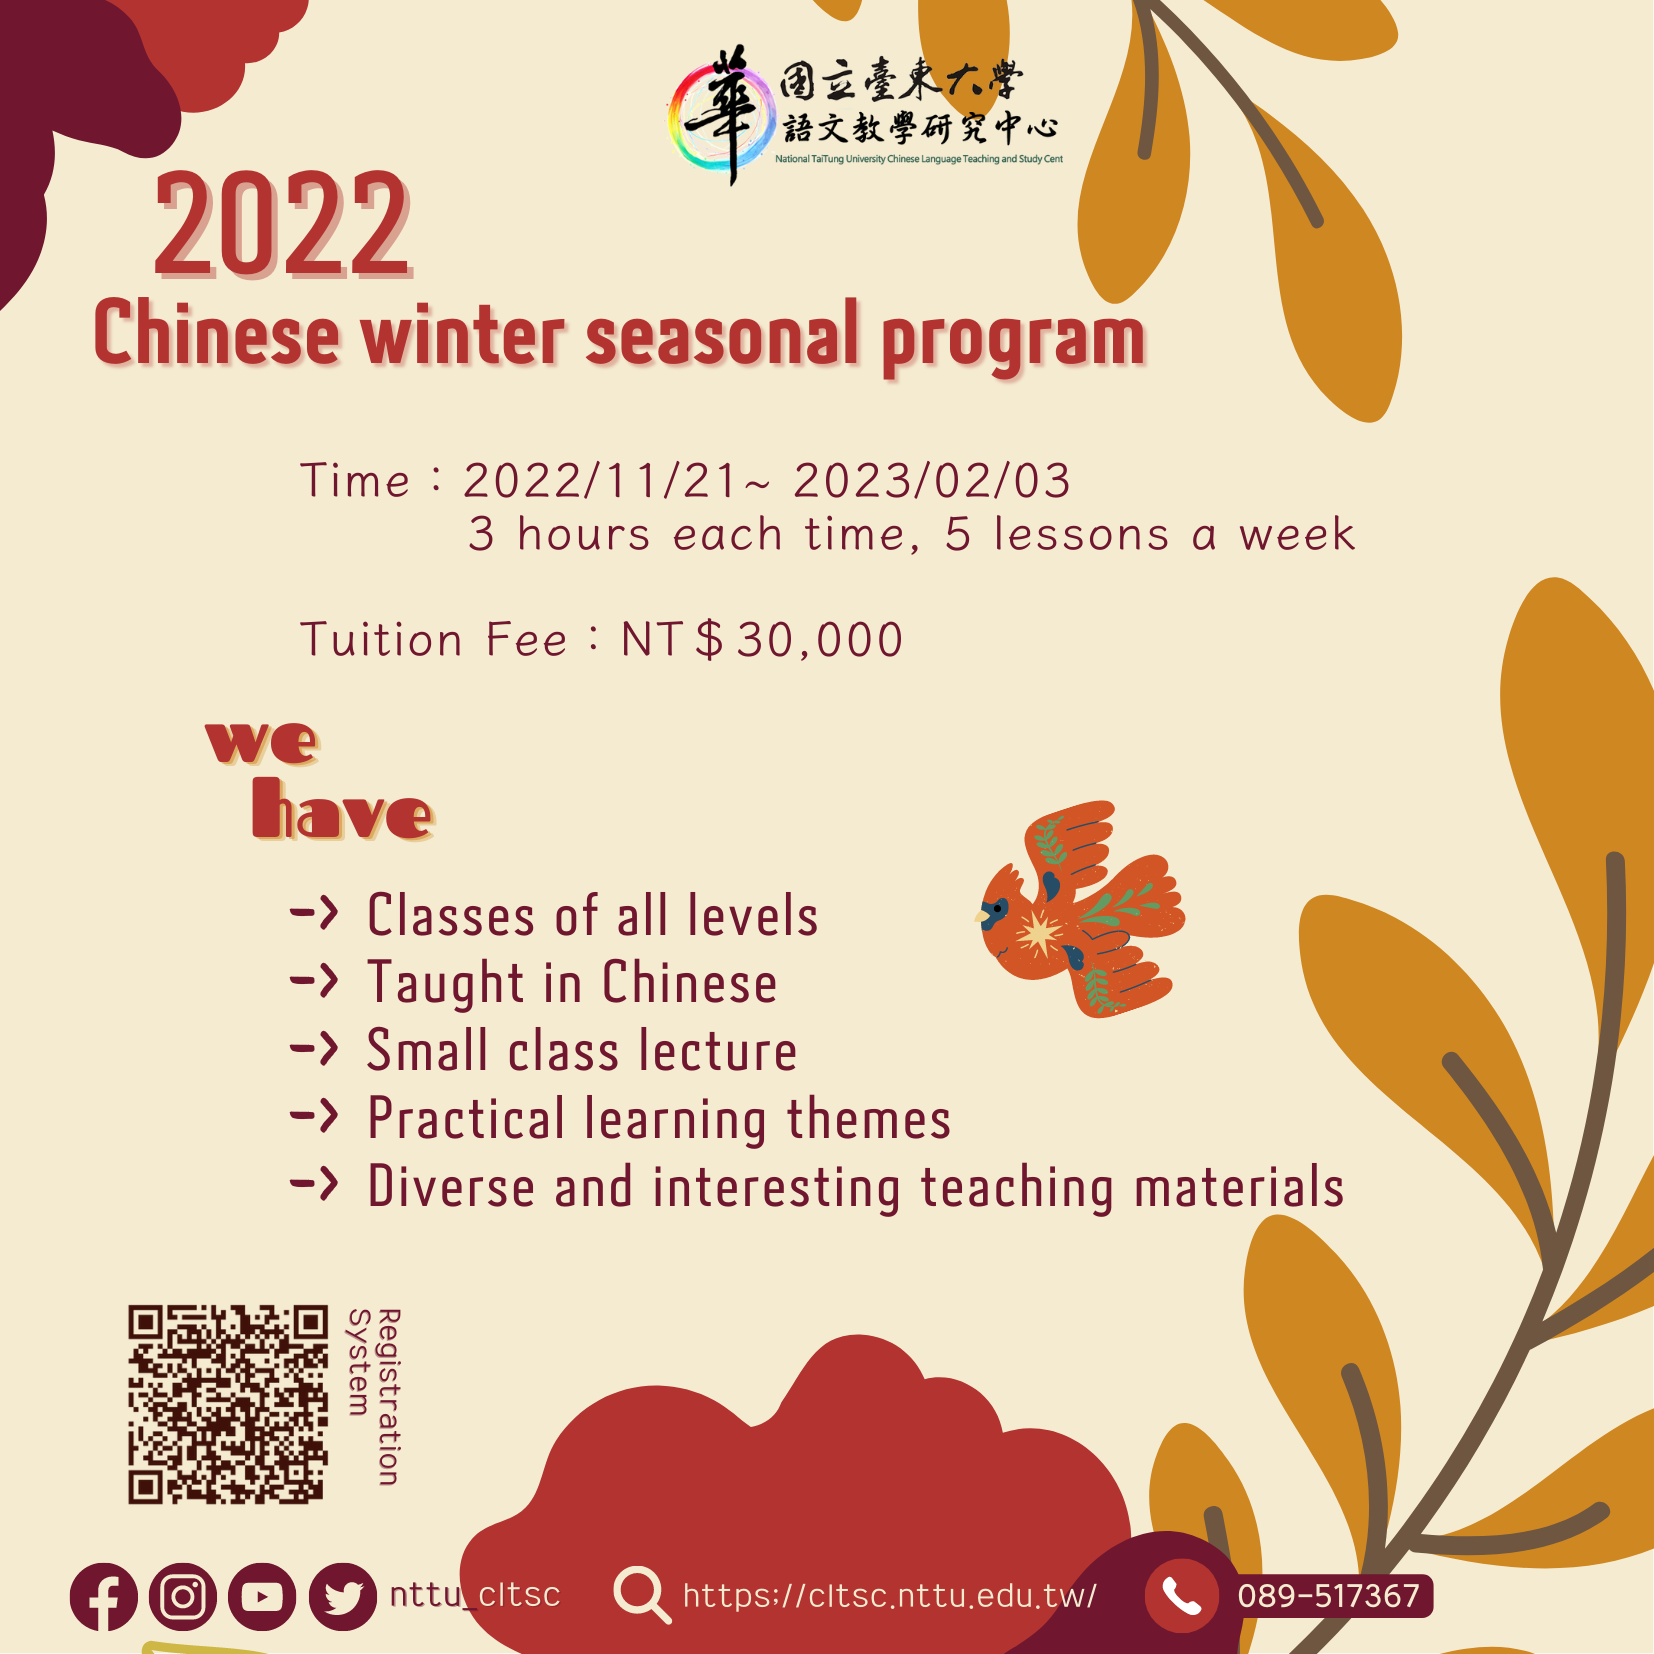 Chinese winter seasonal program be enorlling!